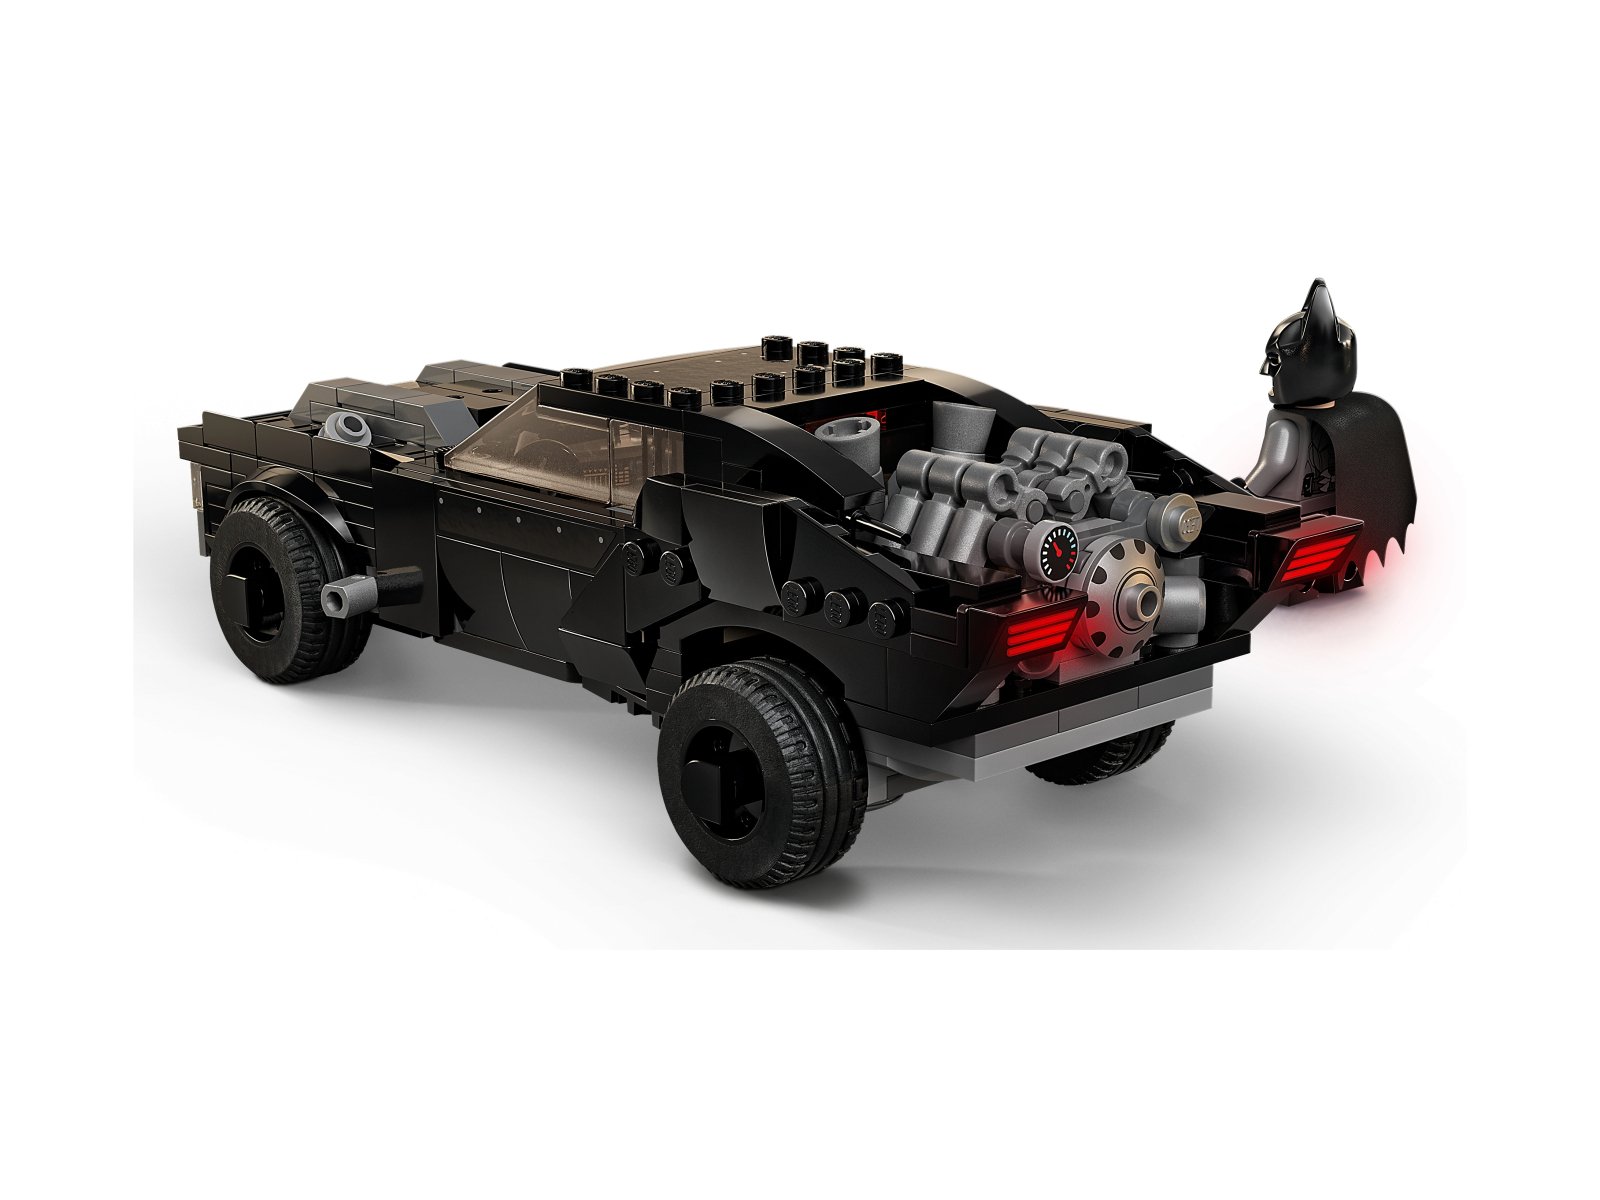 LEGO 76181 Batmobil™: pościg za Pingwinem™